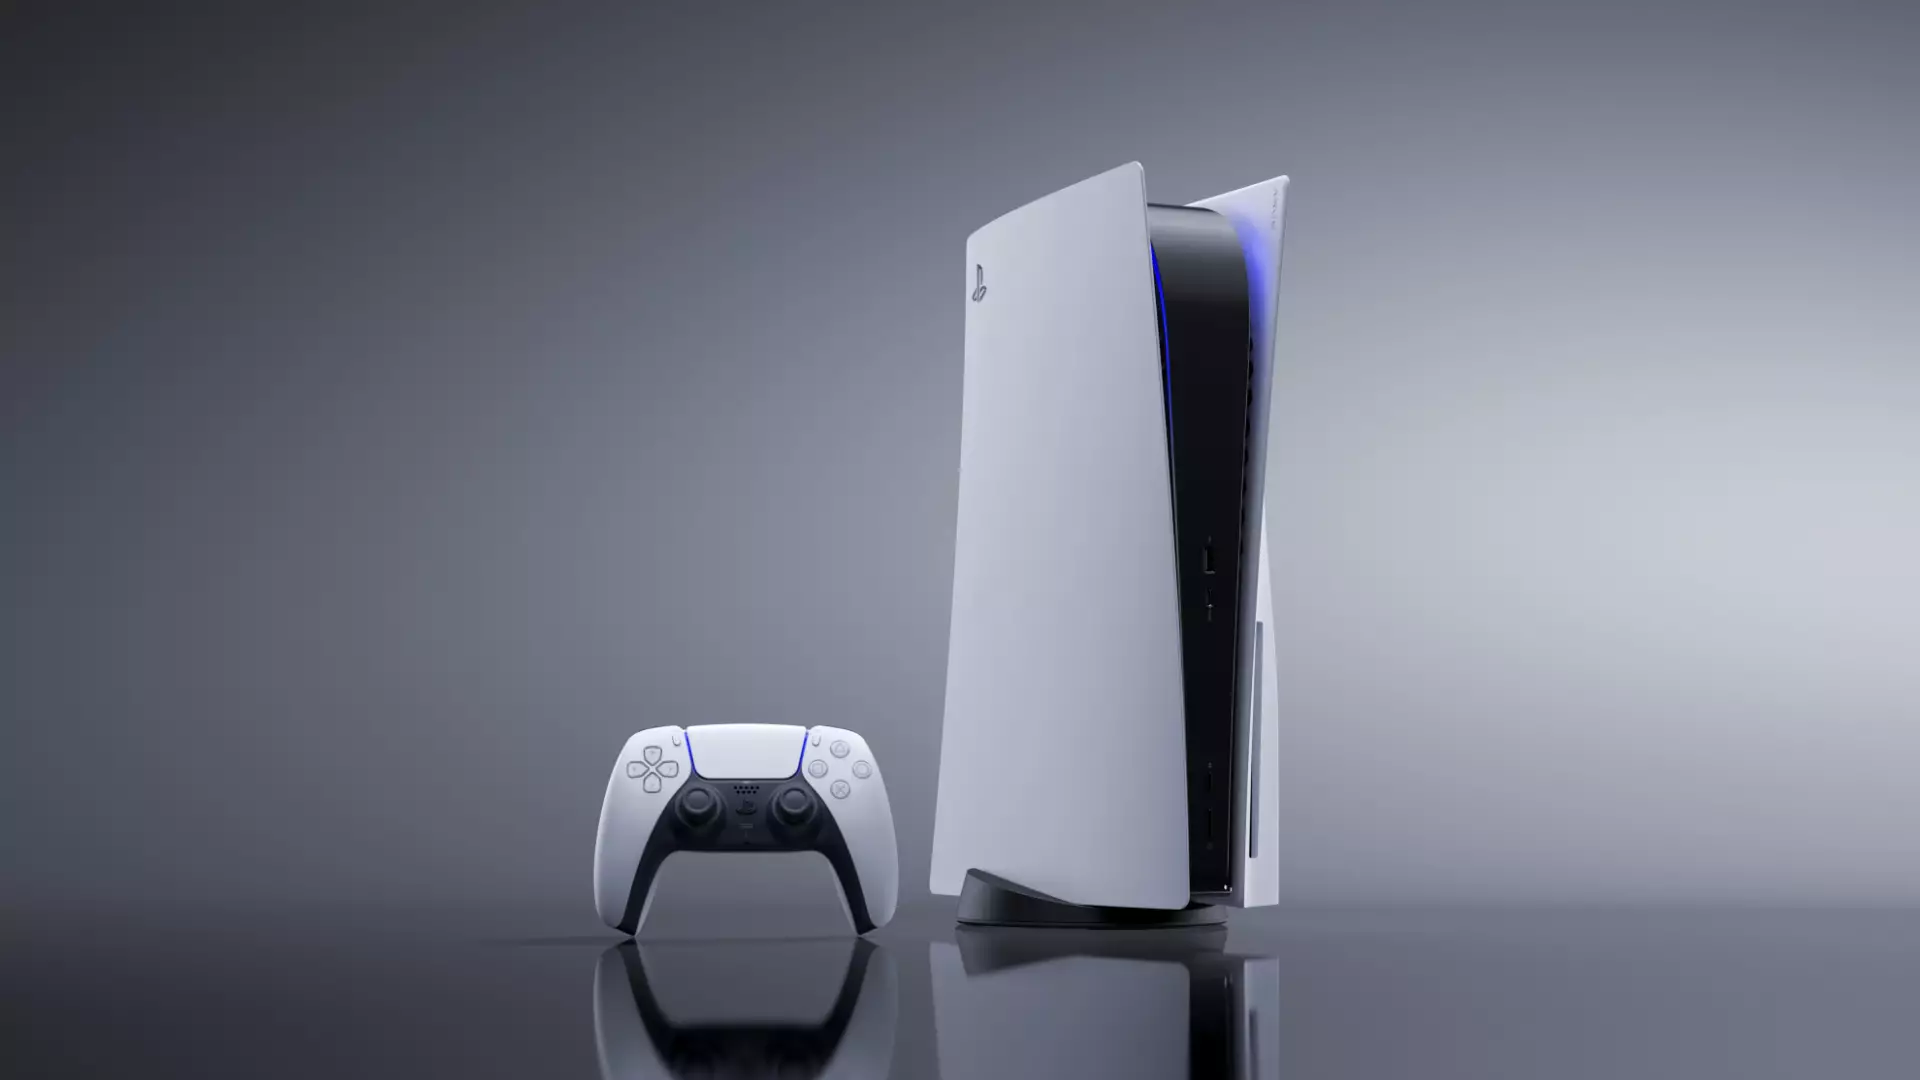 PlayStation 5 Digital Edition (Slim & Original) In Stock Availability